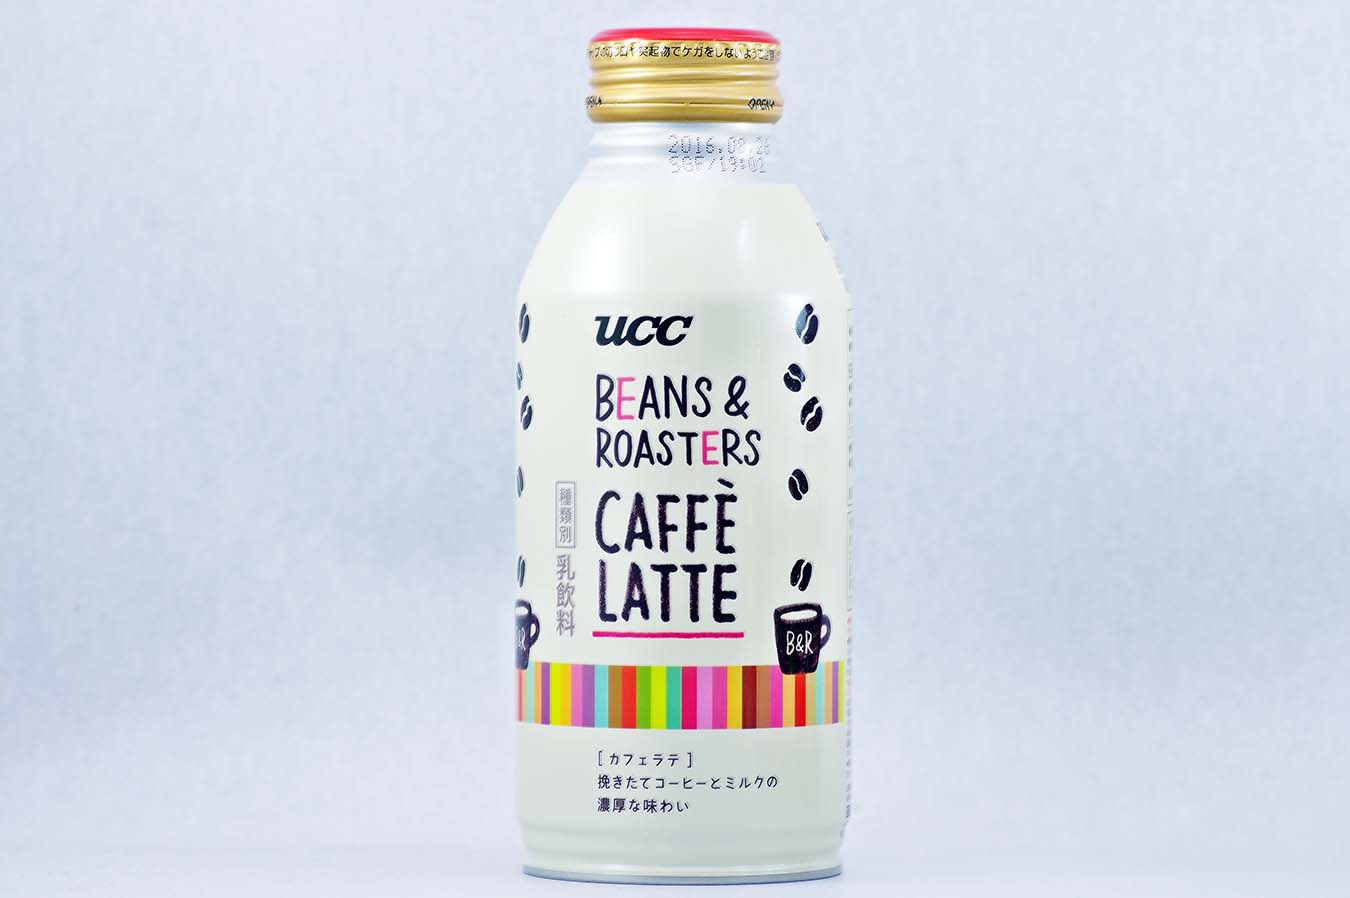 UCC BEANS & ROASTERS CAFFÈ LATTE 375gボトル缶 2015年9月